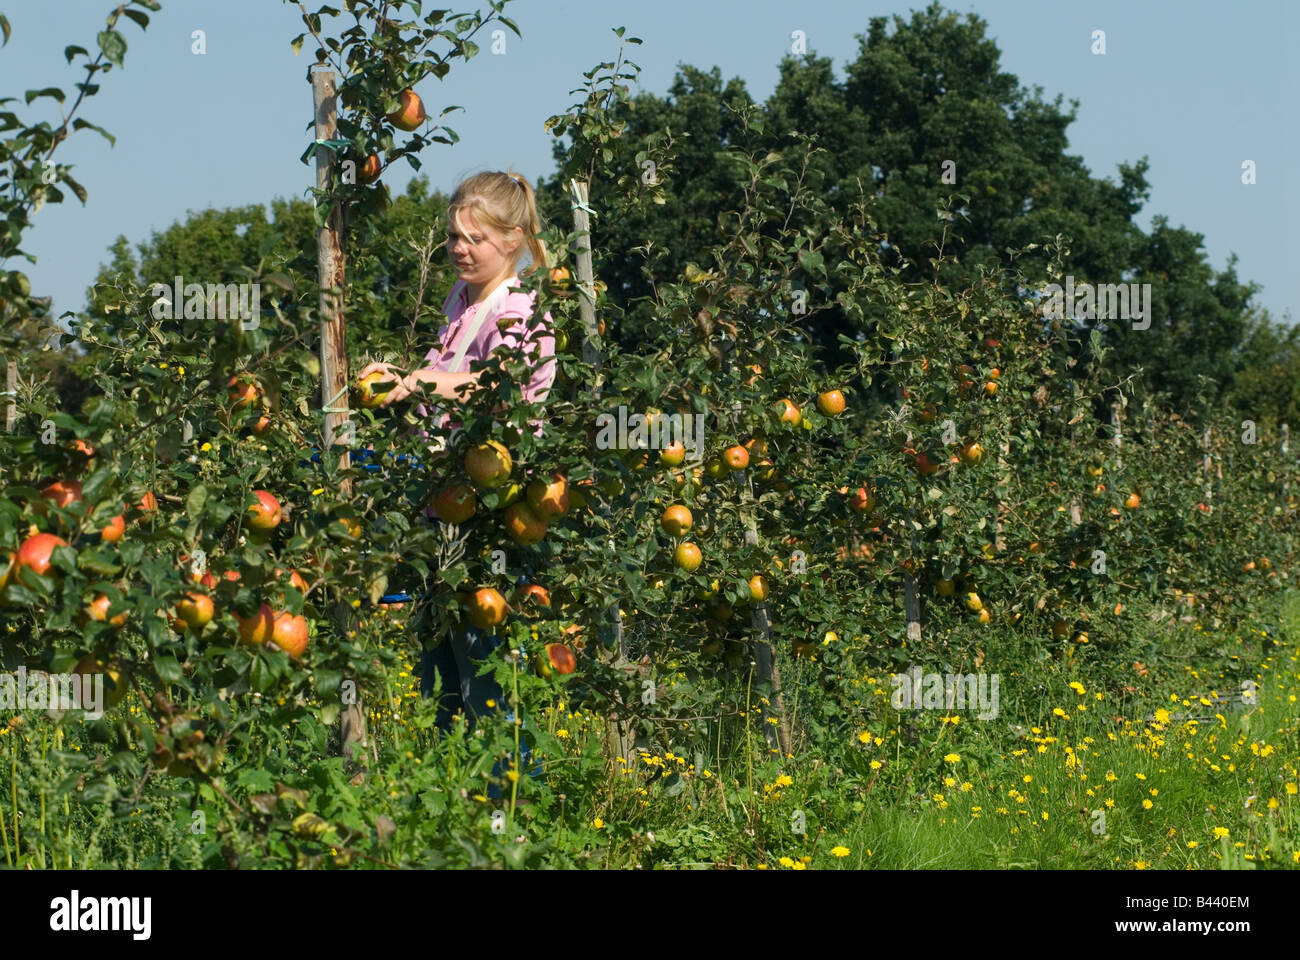 Work experience student picking Honey Crisp apples, Lathcoats Apple Farm Galleywood Essex UK HOMER SYKES Stock Photo